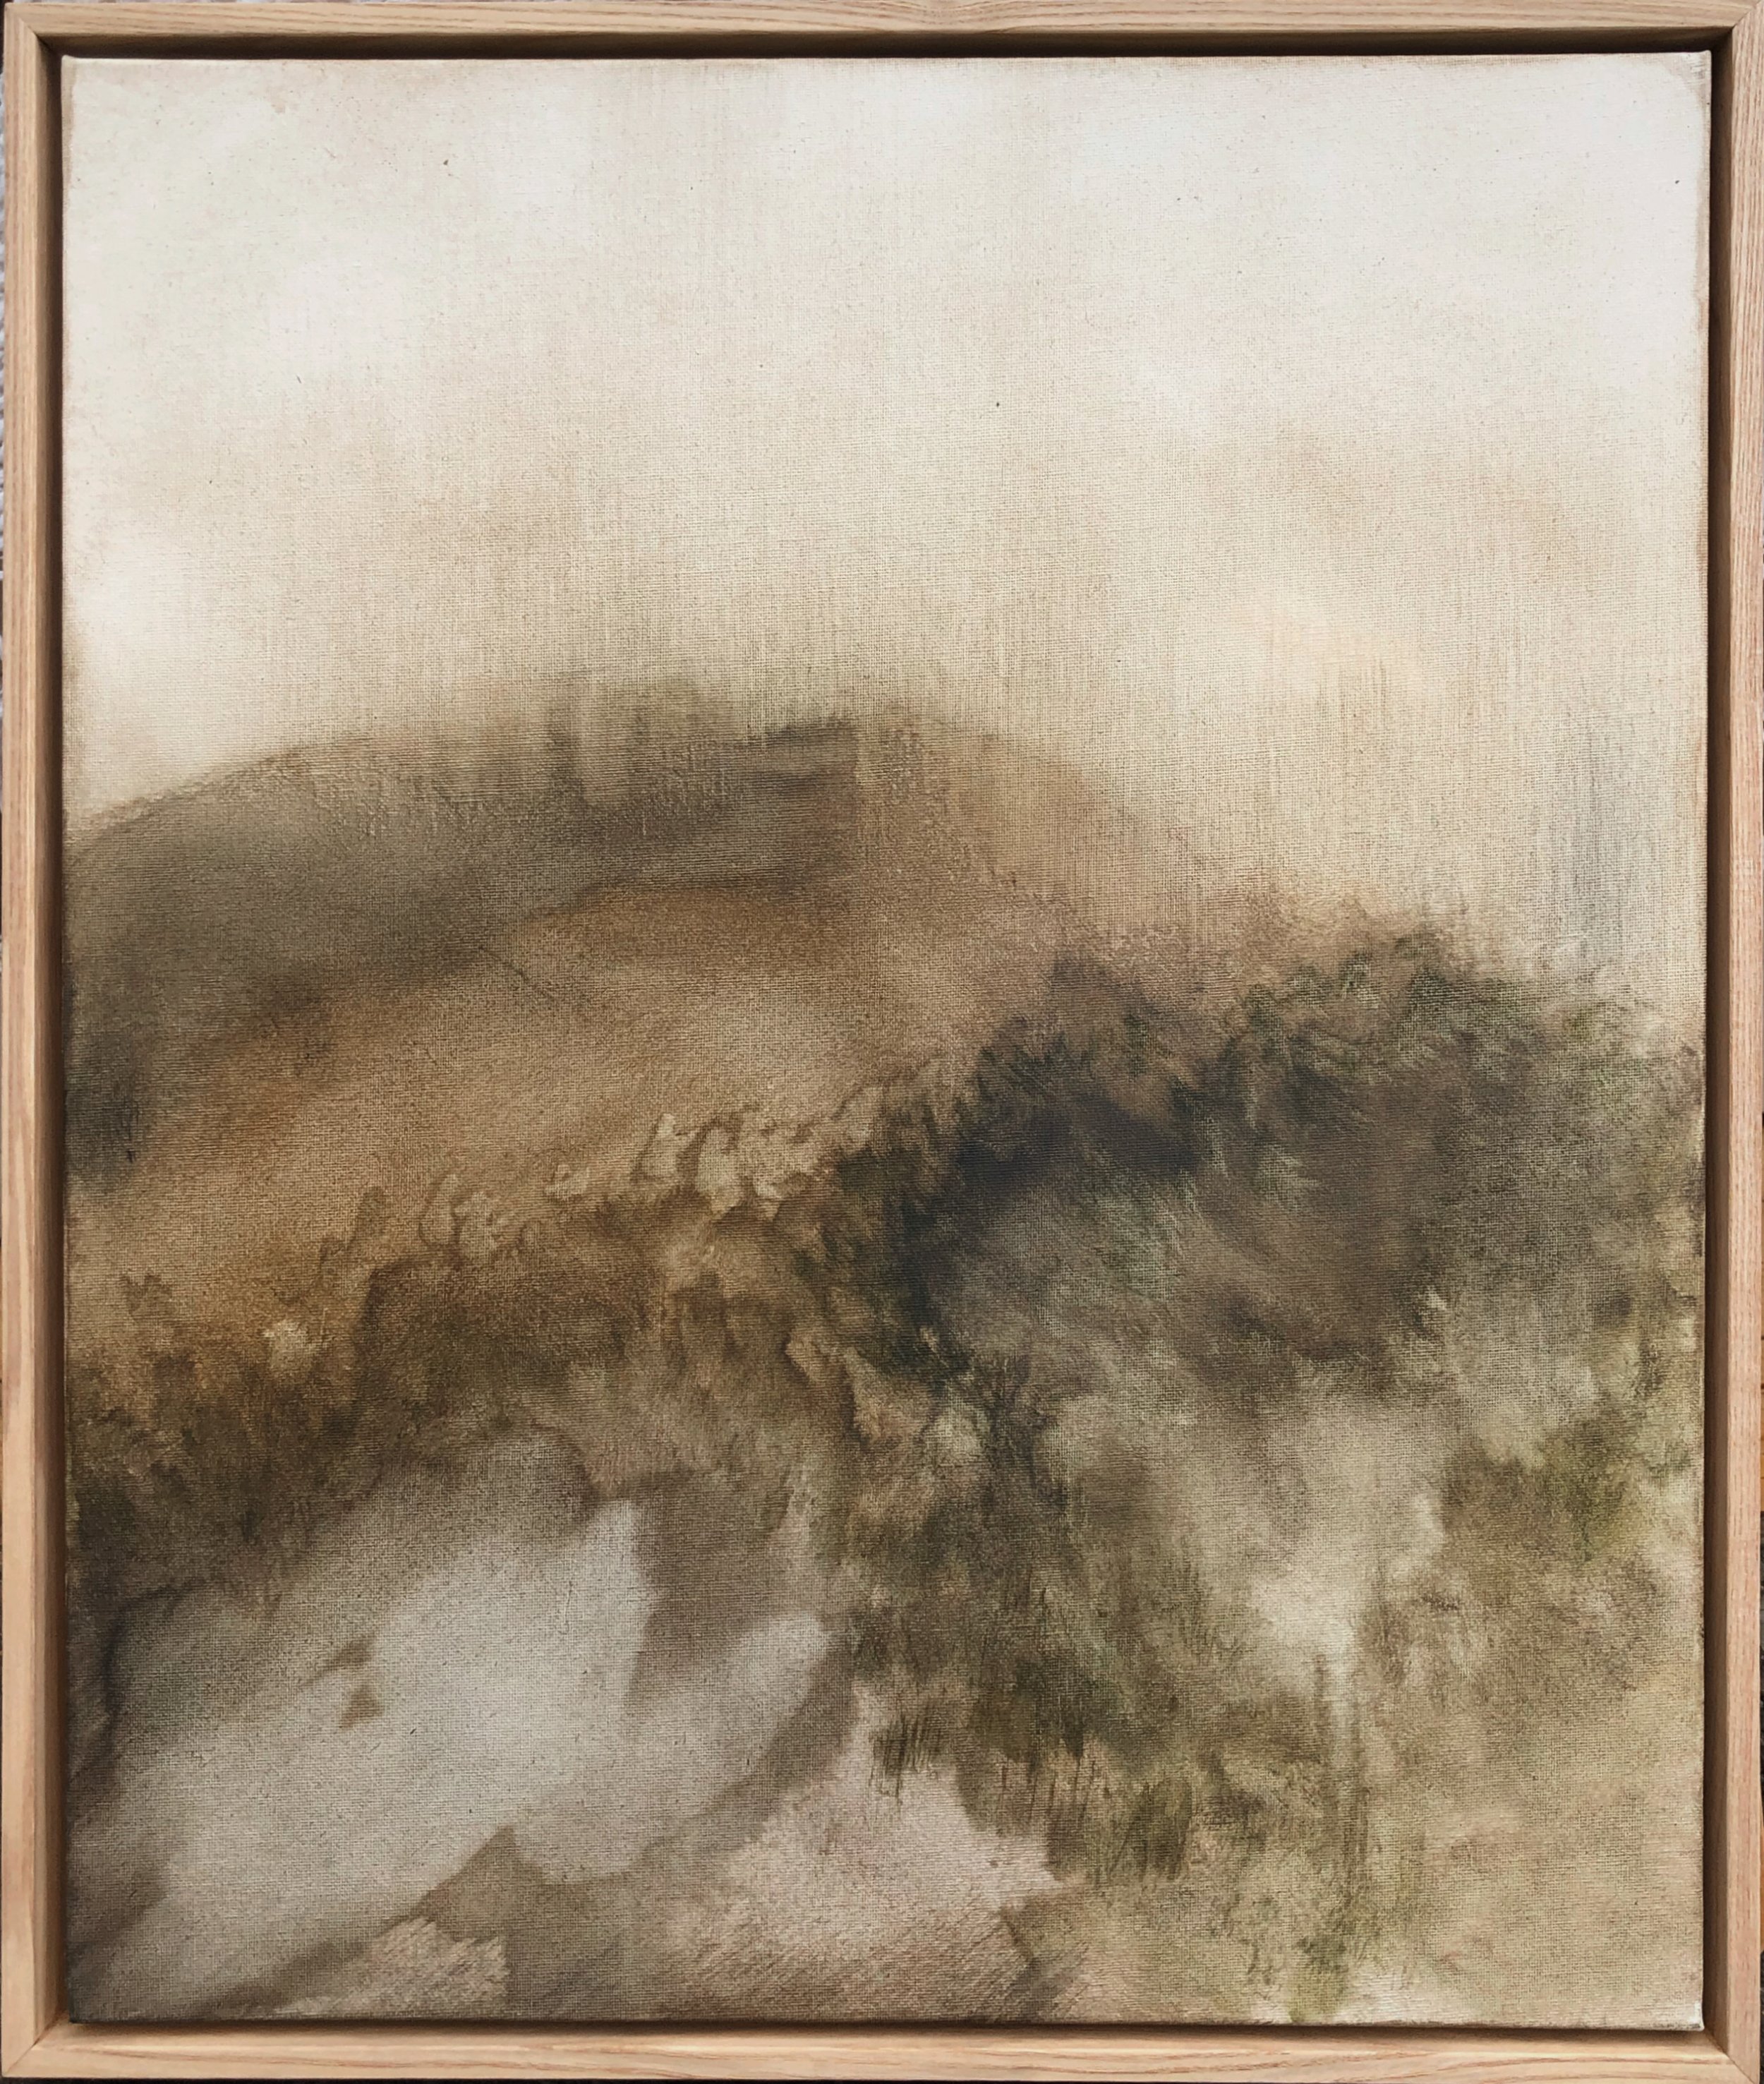 Mist on Oberon (sold)